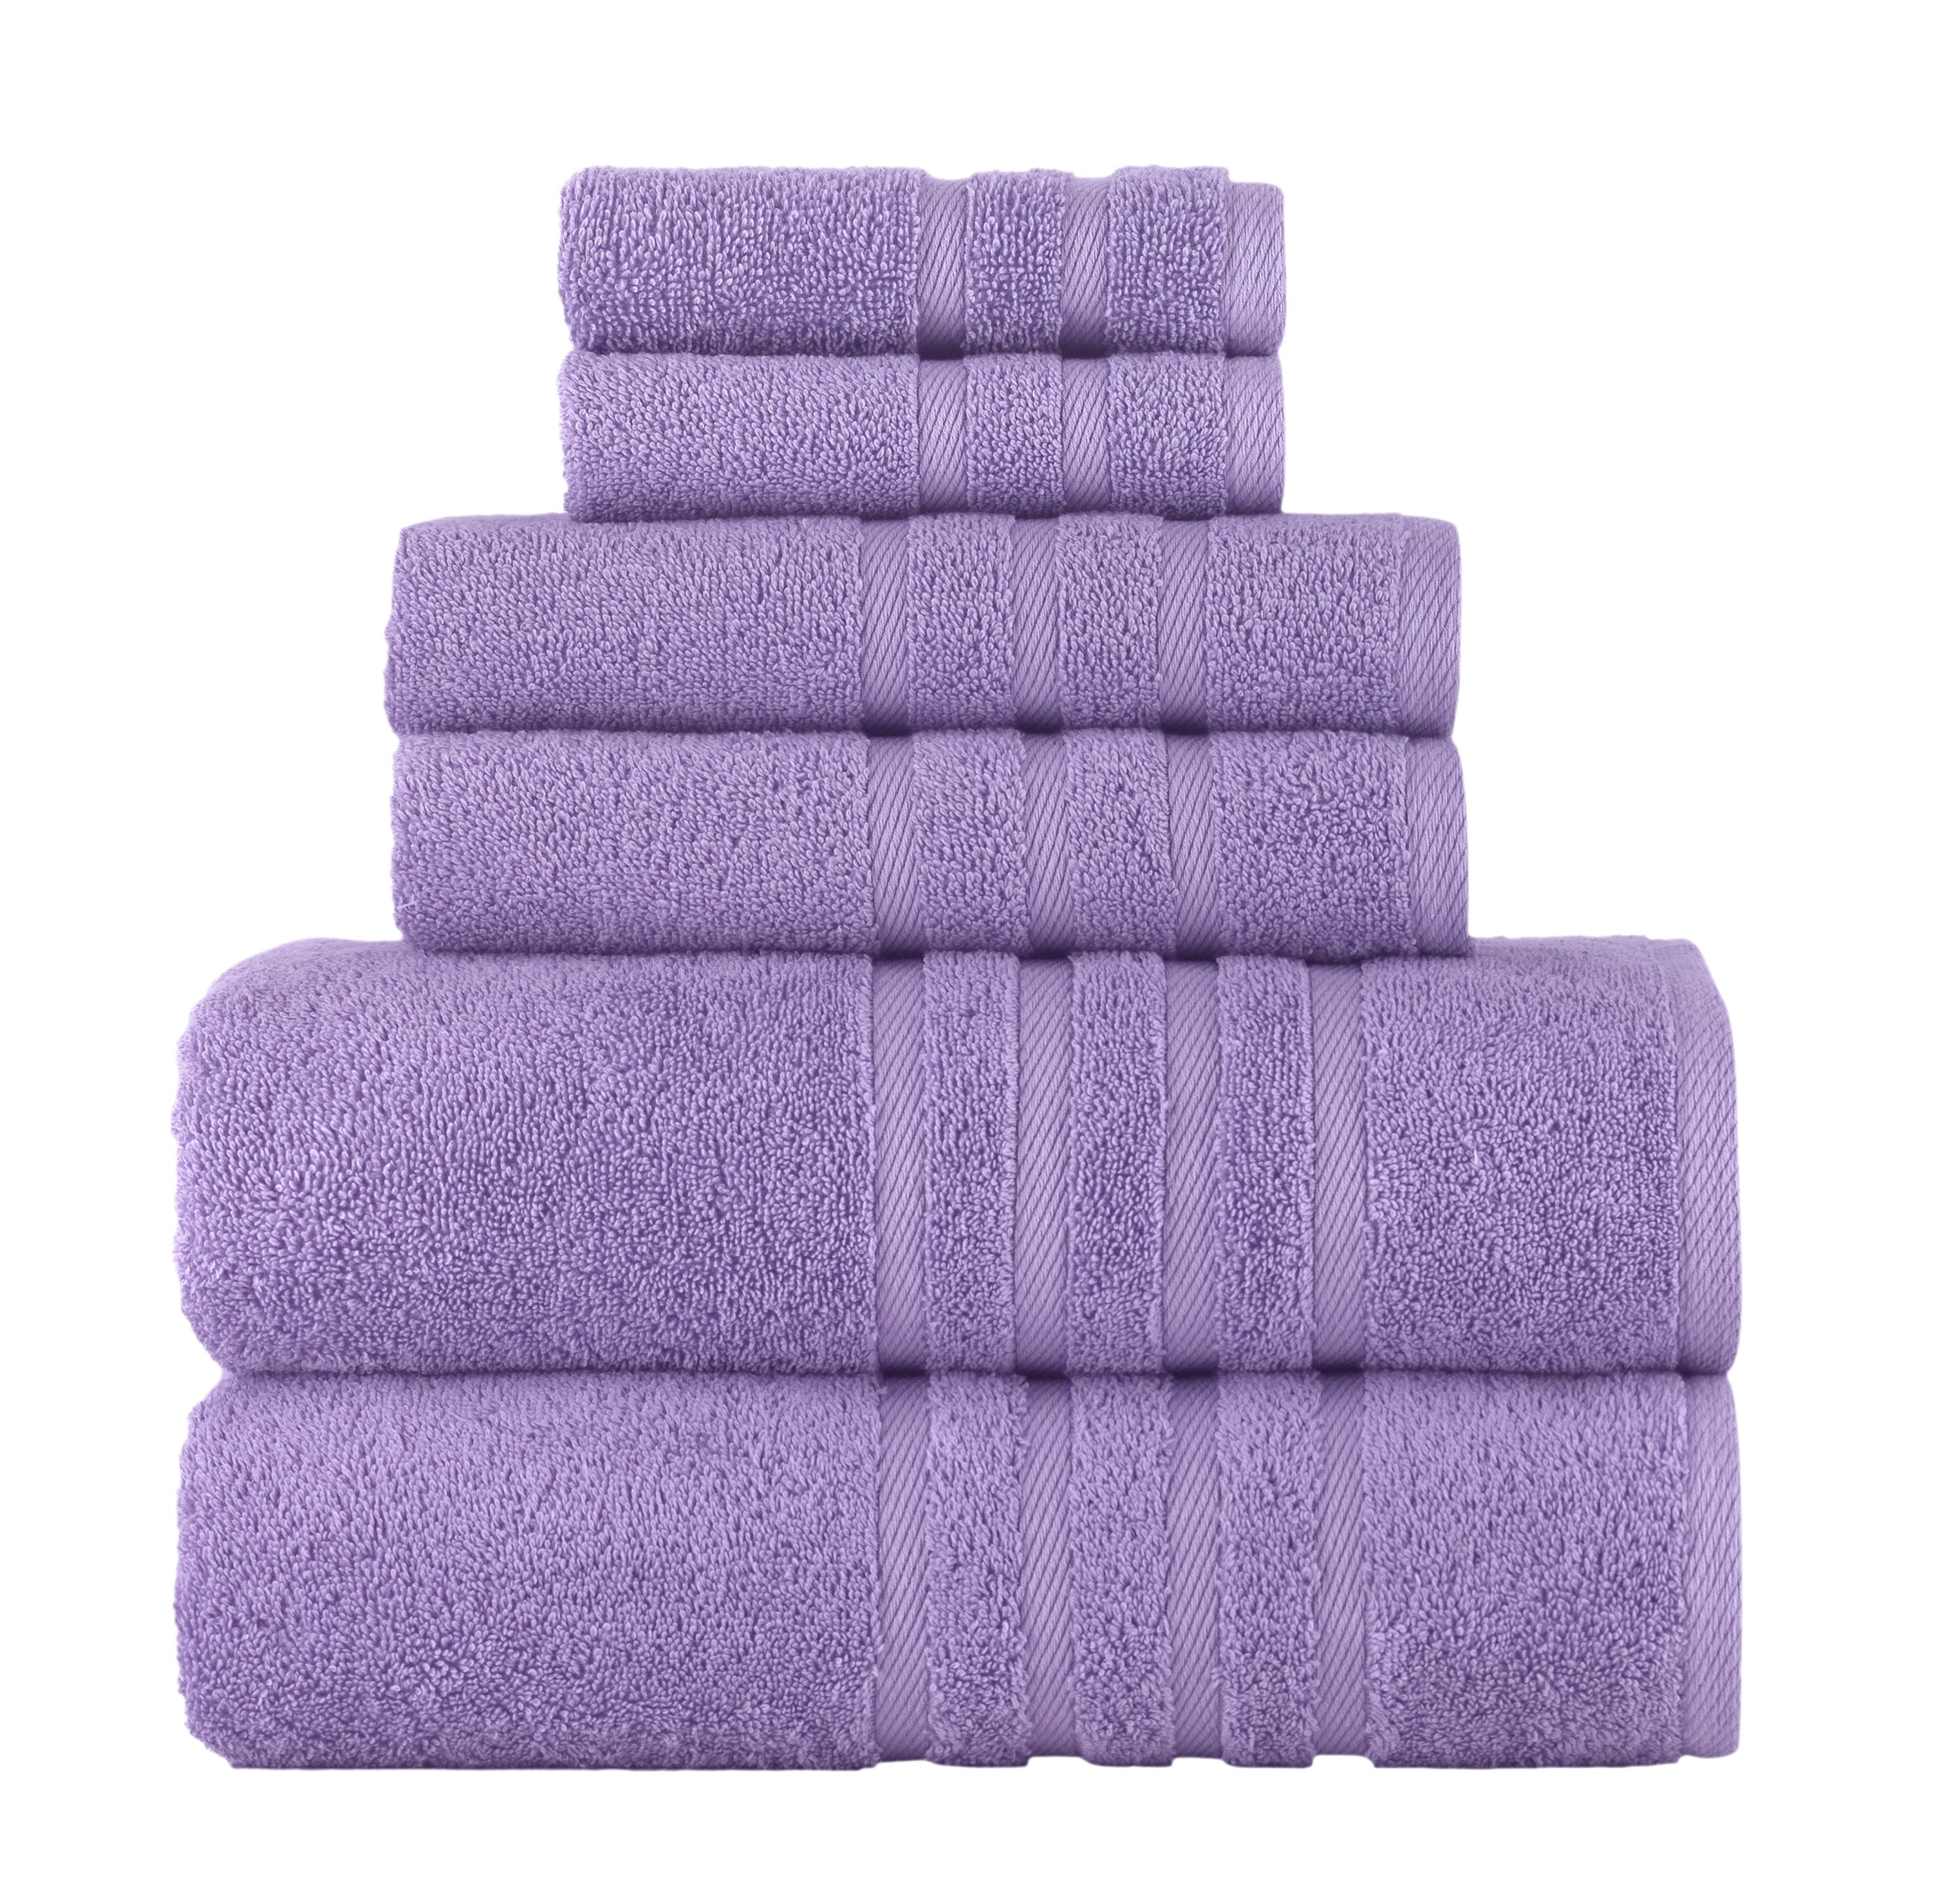 Lavender Luxury Bath Towels Set, Turkish Cotton Hotel Large Bath Towels Bulk  for Bathroom, Thick Bathroom Towels Set of 6 with 2 Bath Towels, 2 Hand  Towels, 2 Washcloths, 650 GSM. 